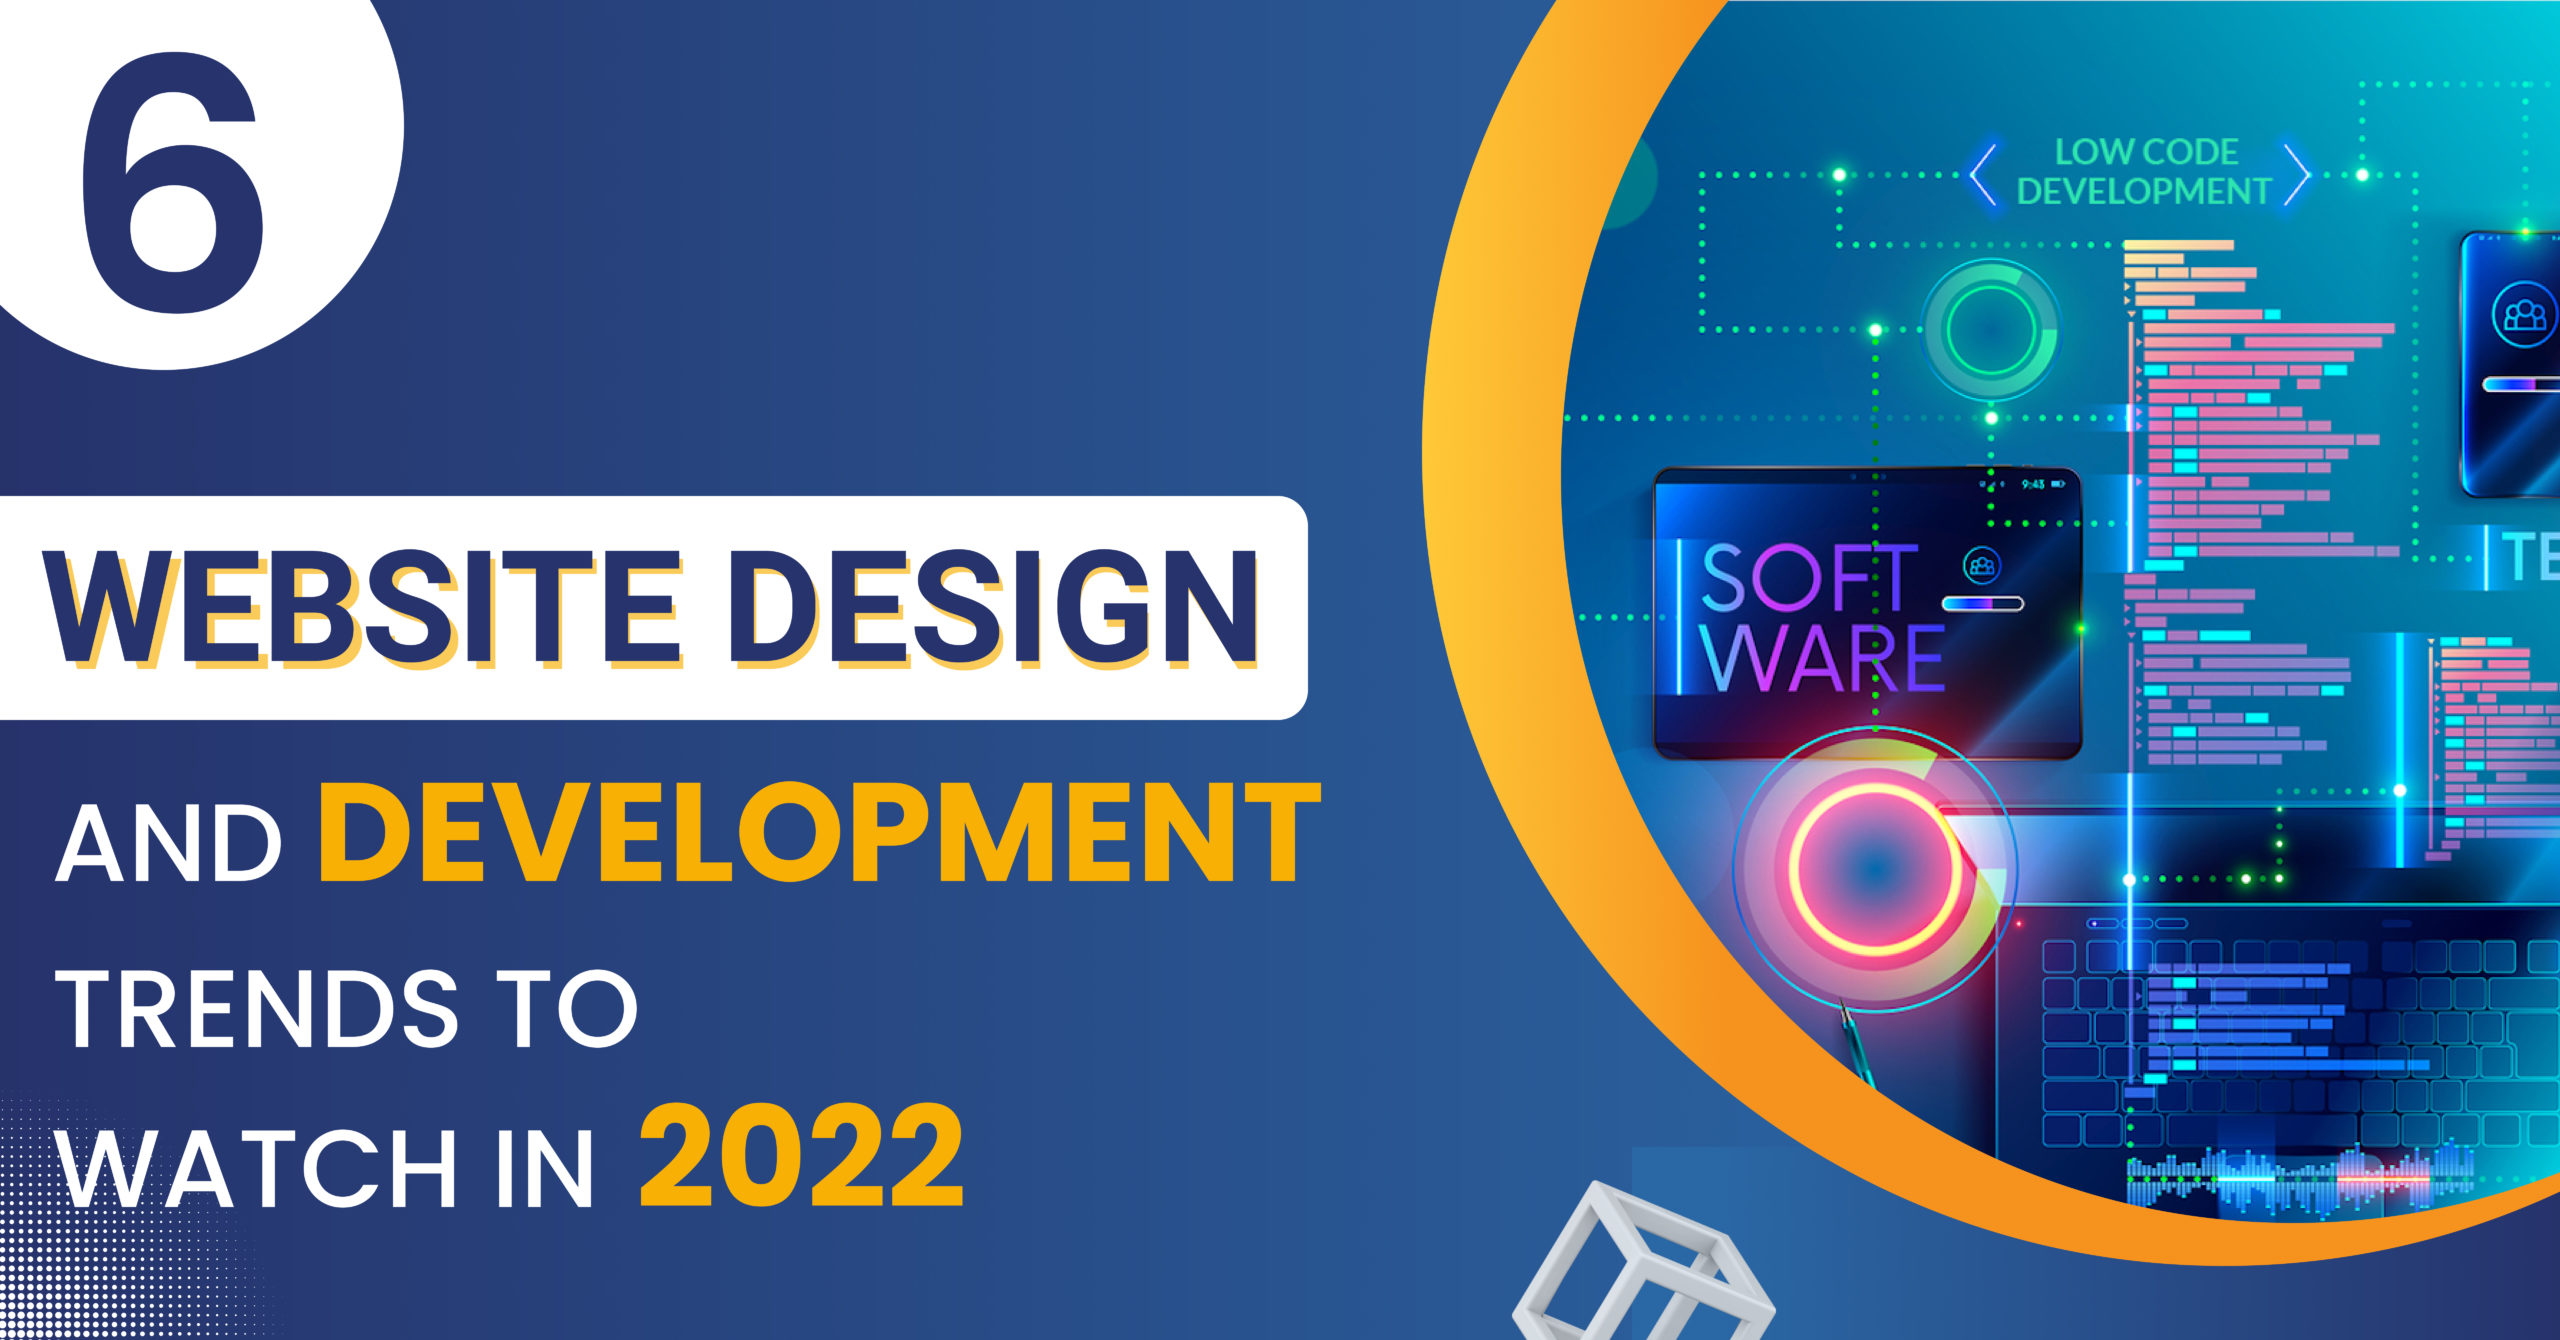 Website Design and Development Trends to Watch in 2022